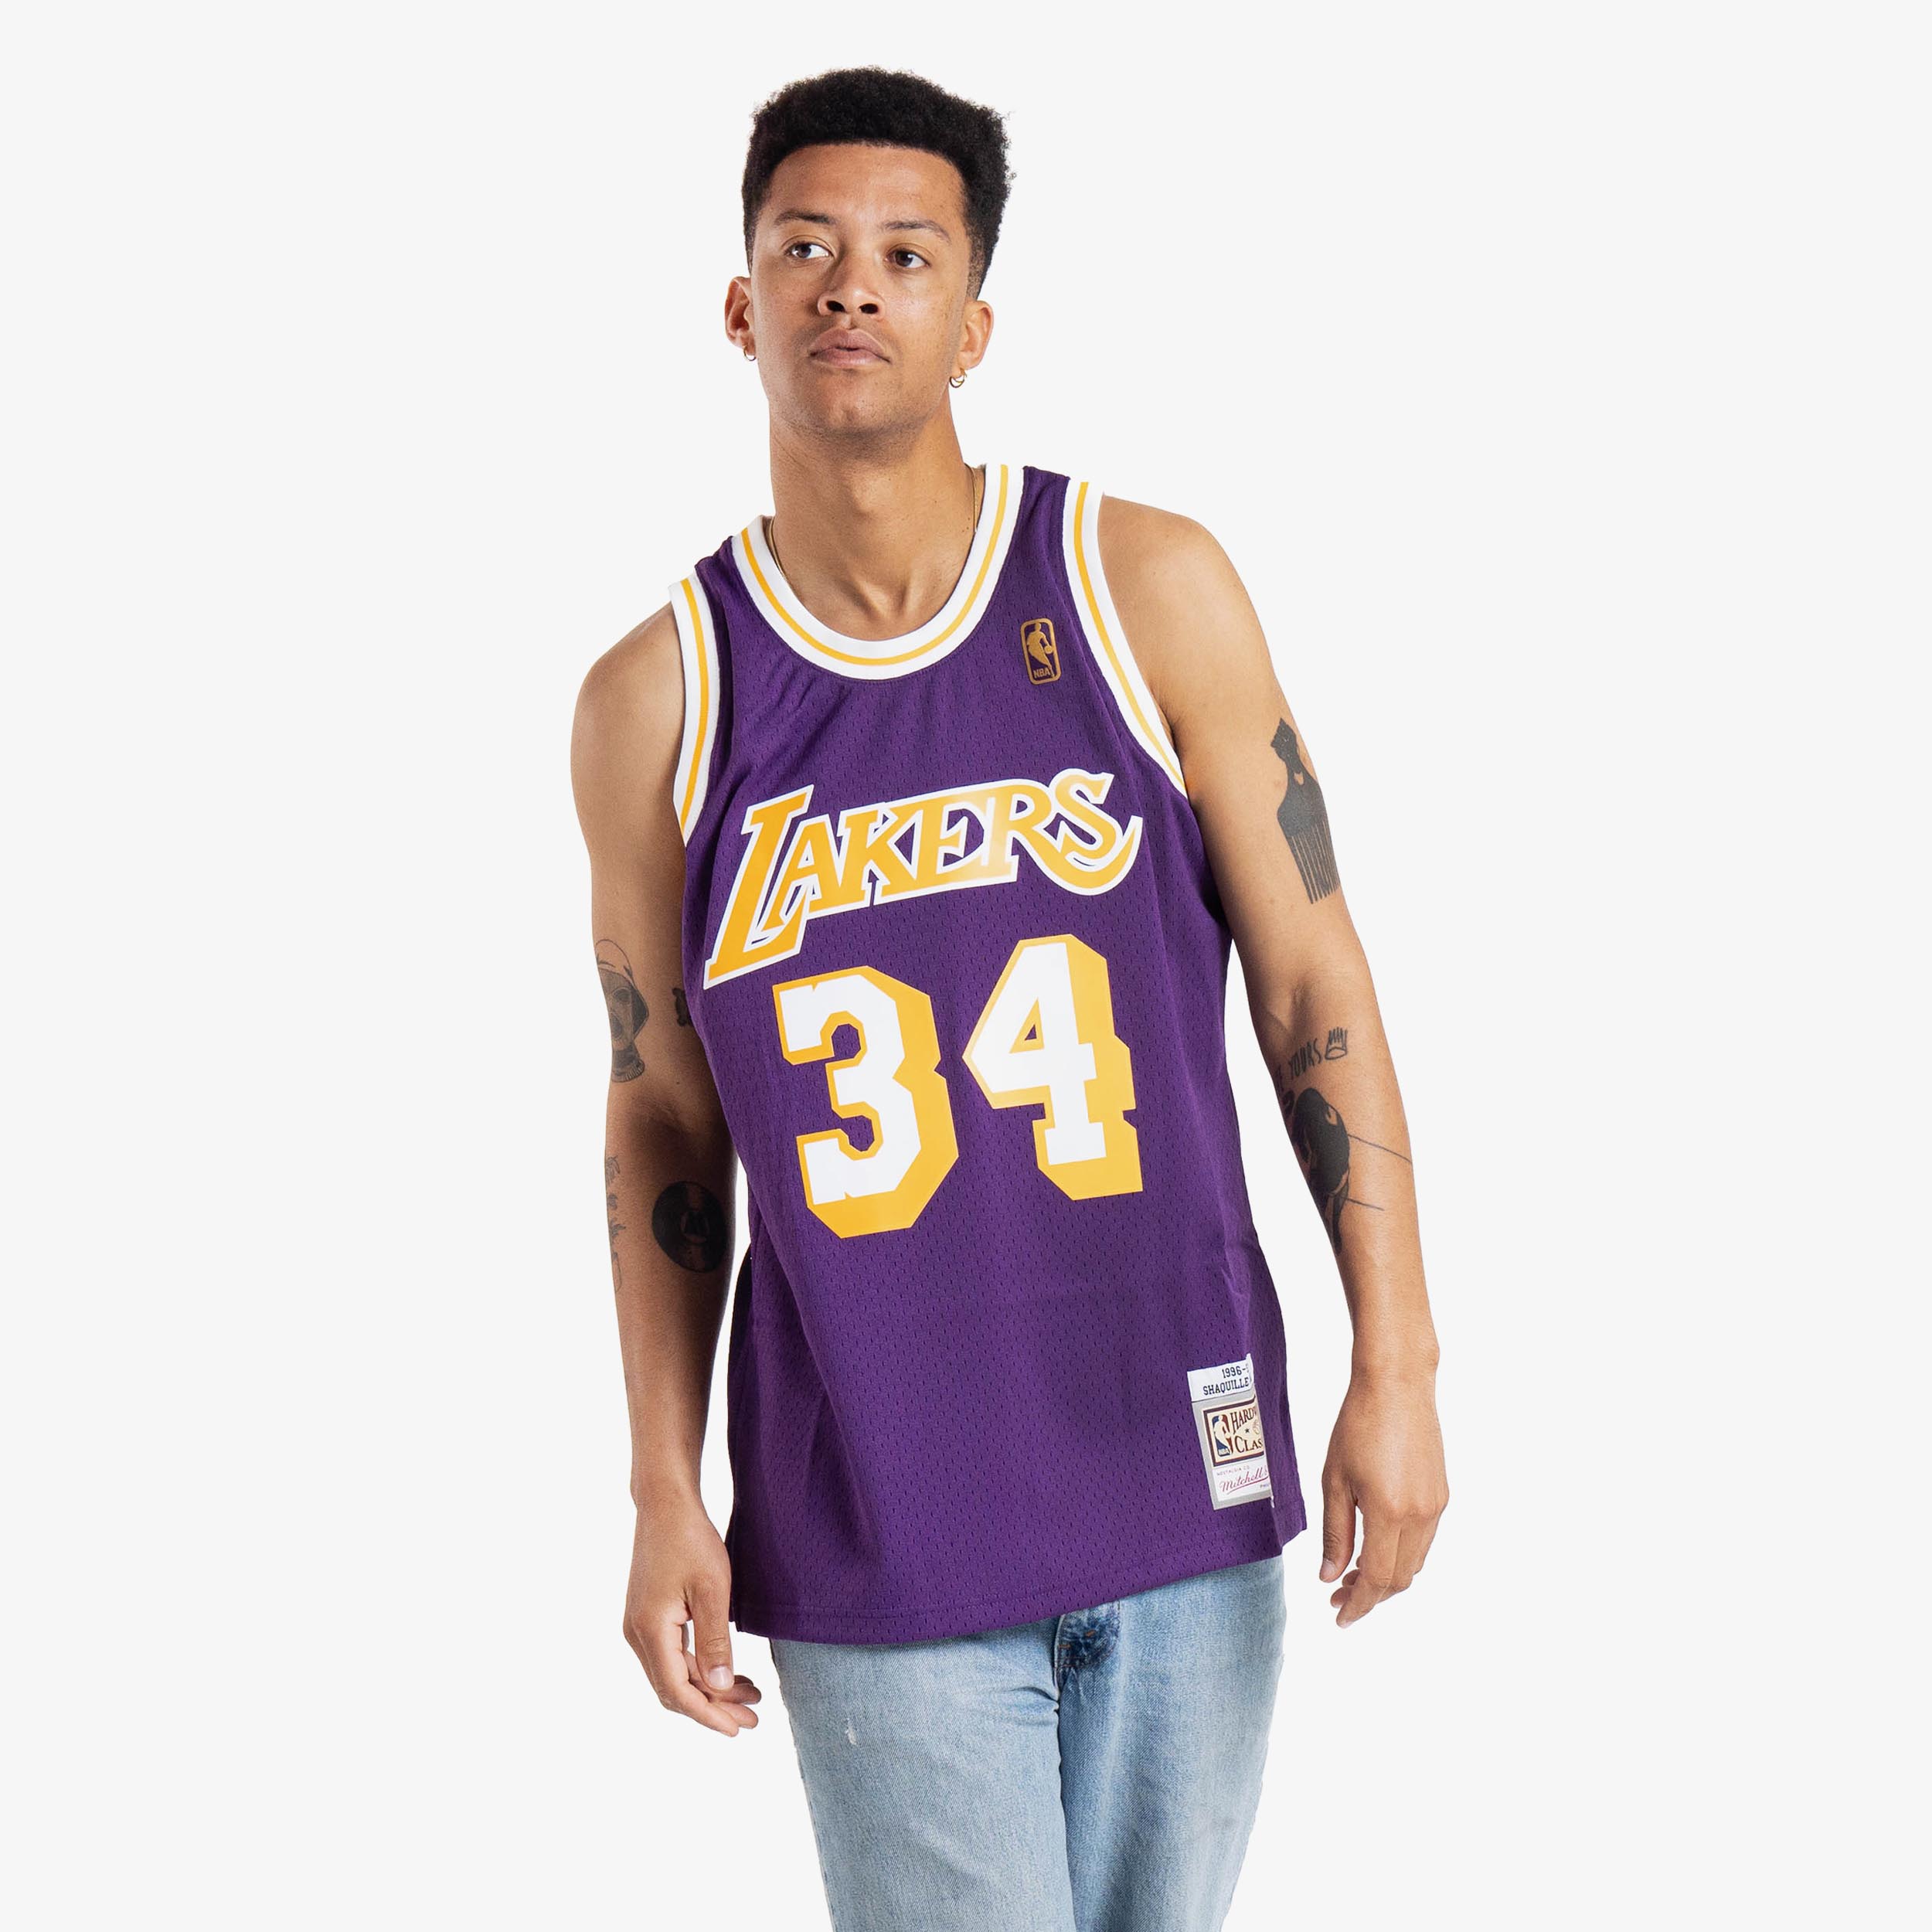 Lakers Jerseys - Shop the Freshest Vintage or Modern LA Lakers Jerseys ...